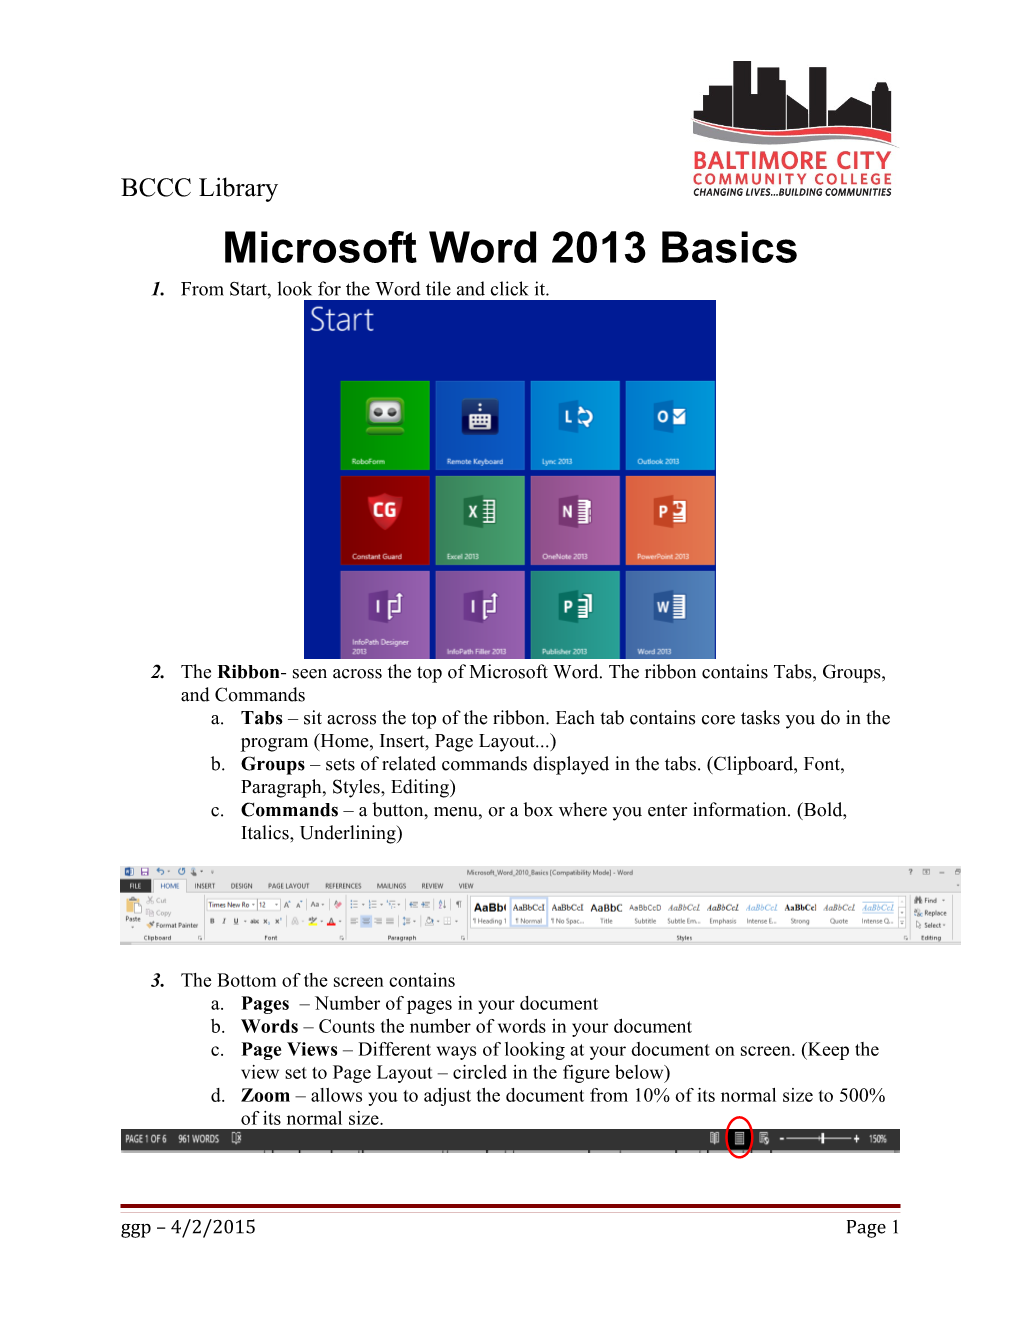 Microsoft Word Basics s1